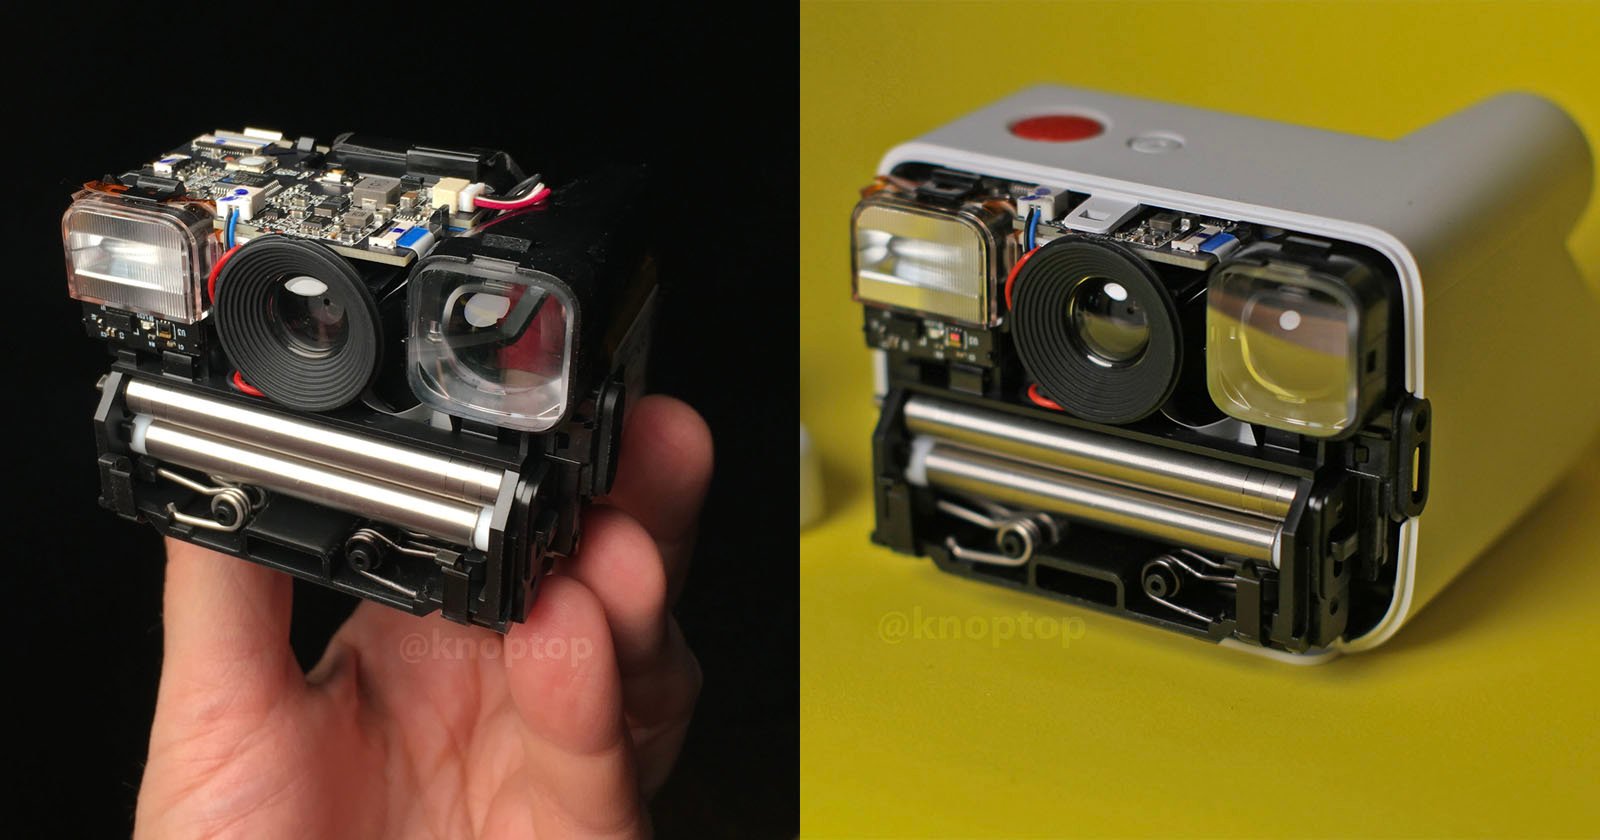 https://petapixel.com/assets/uploads/2021/05/Polaroid-Go-Instant-Camera-Teardown-Inside-the-Tiny-Film-Camera.jpg